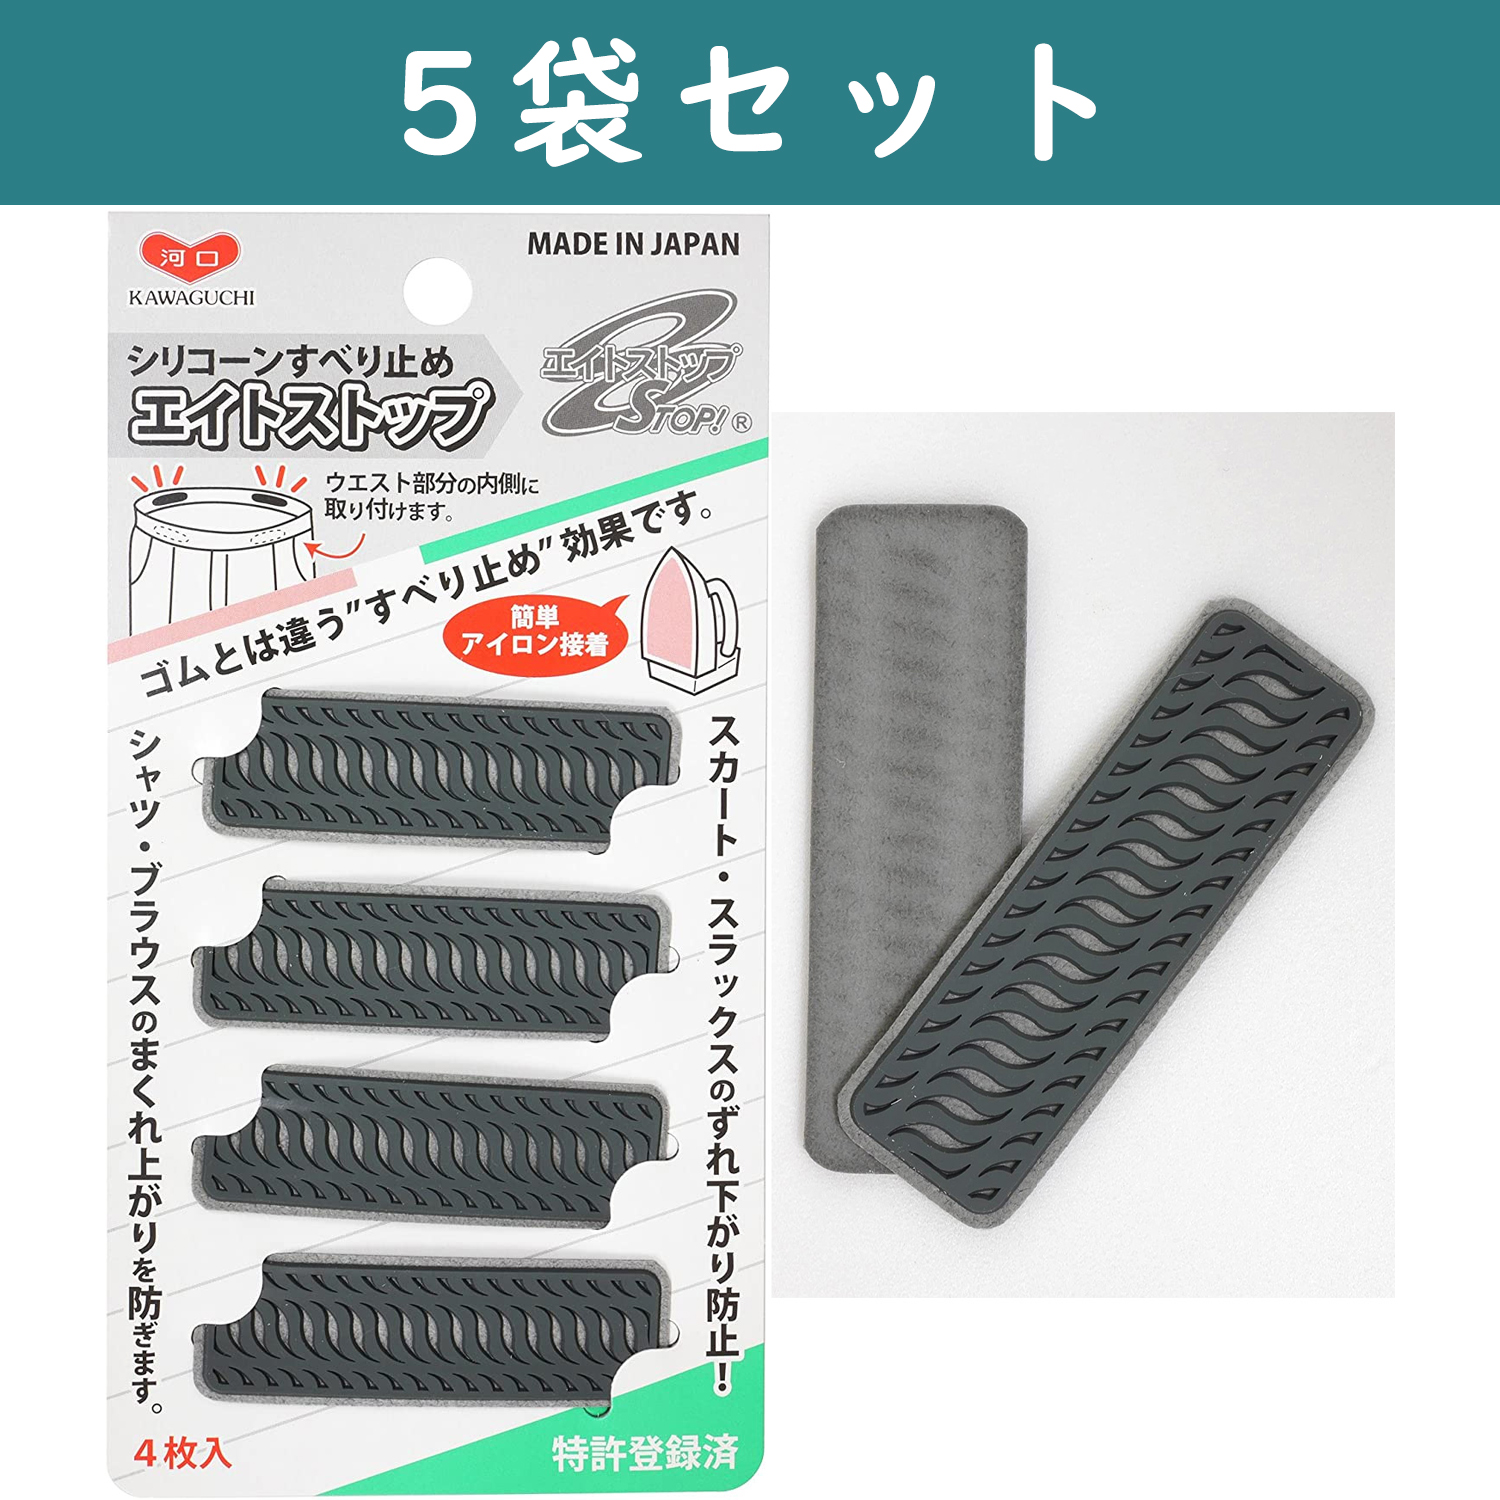 TK80019-5 KAWAGUCHI Eight Stop Silicone Anti-Slip Thermal Adhesive Type 4 pcs x 5 Bags Set Gray (Set)